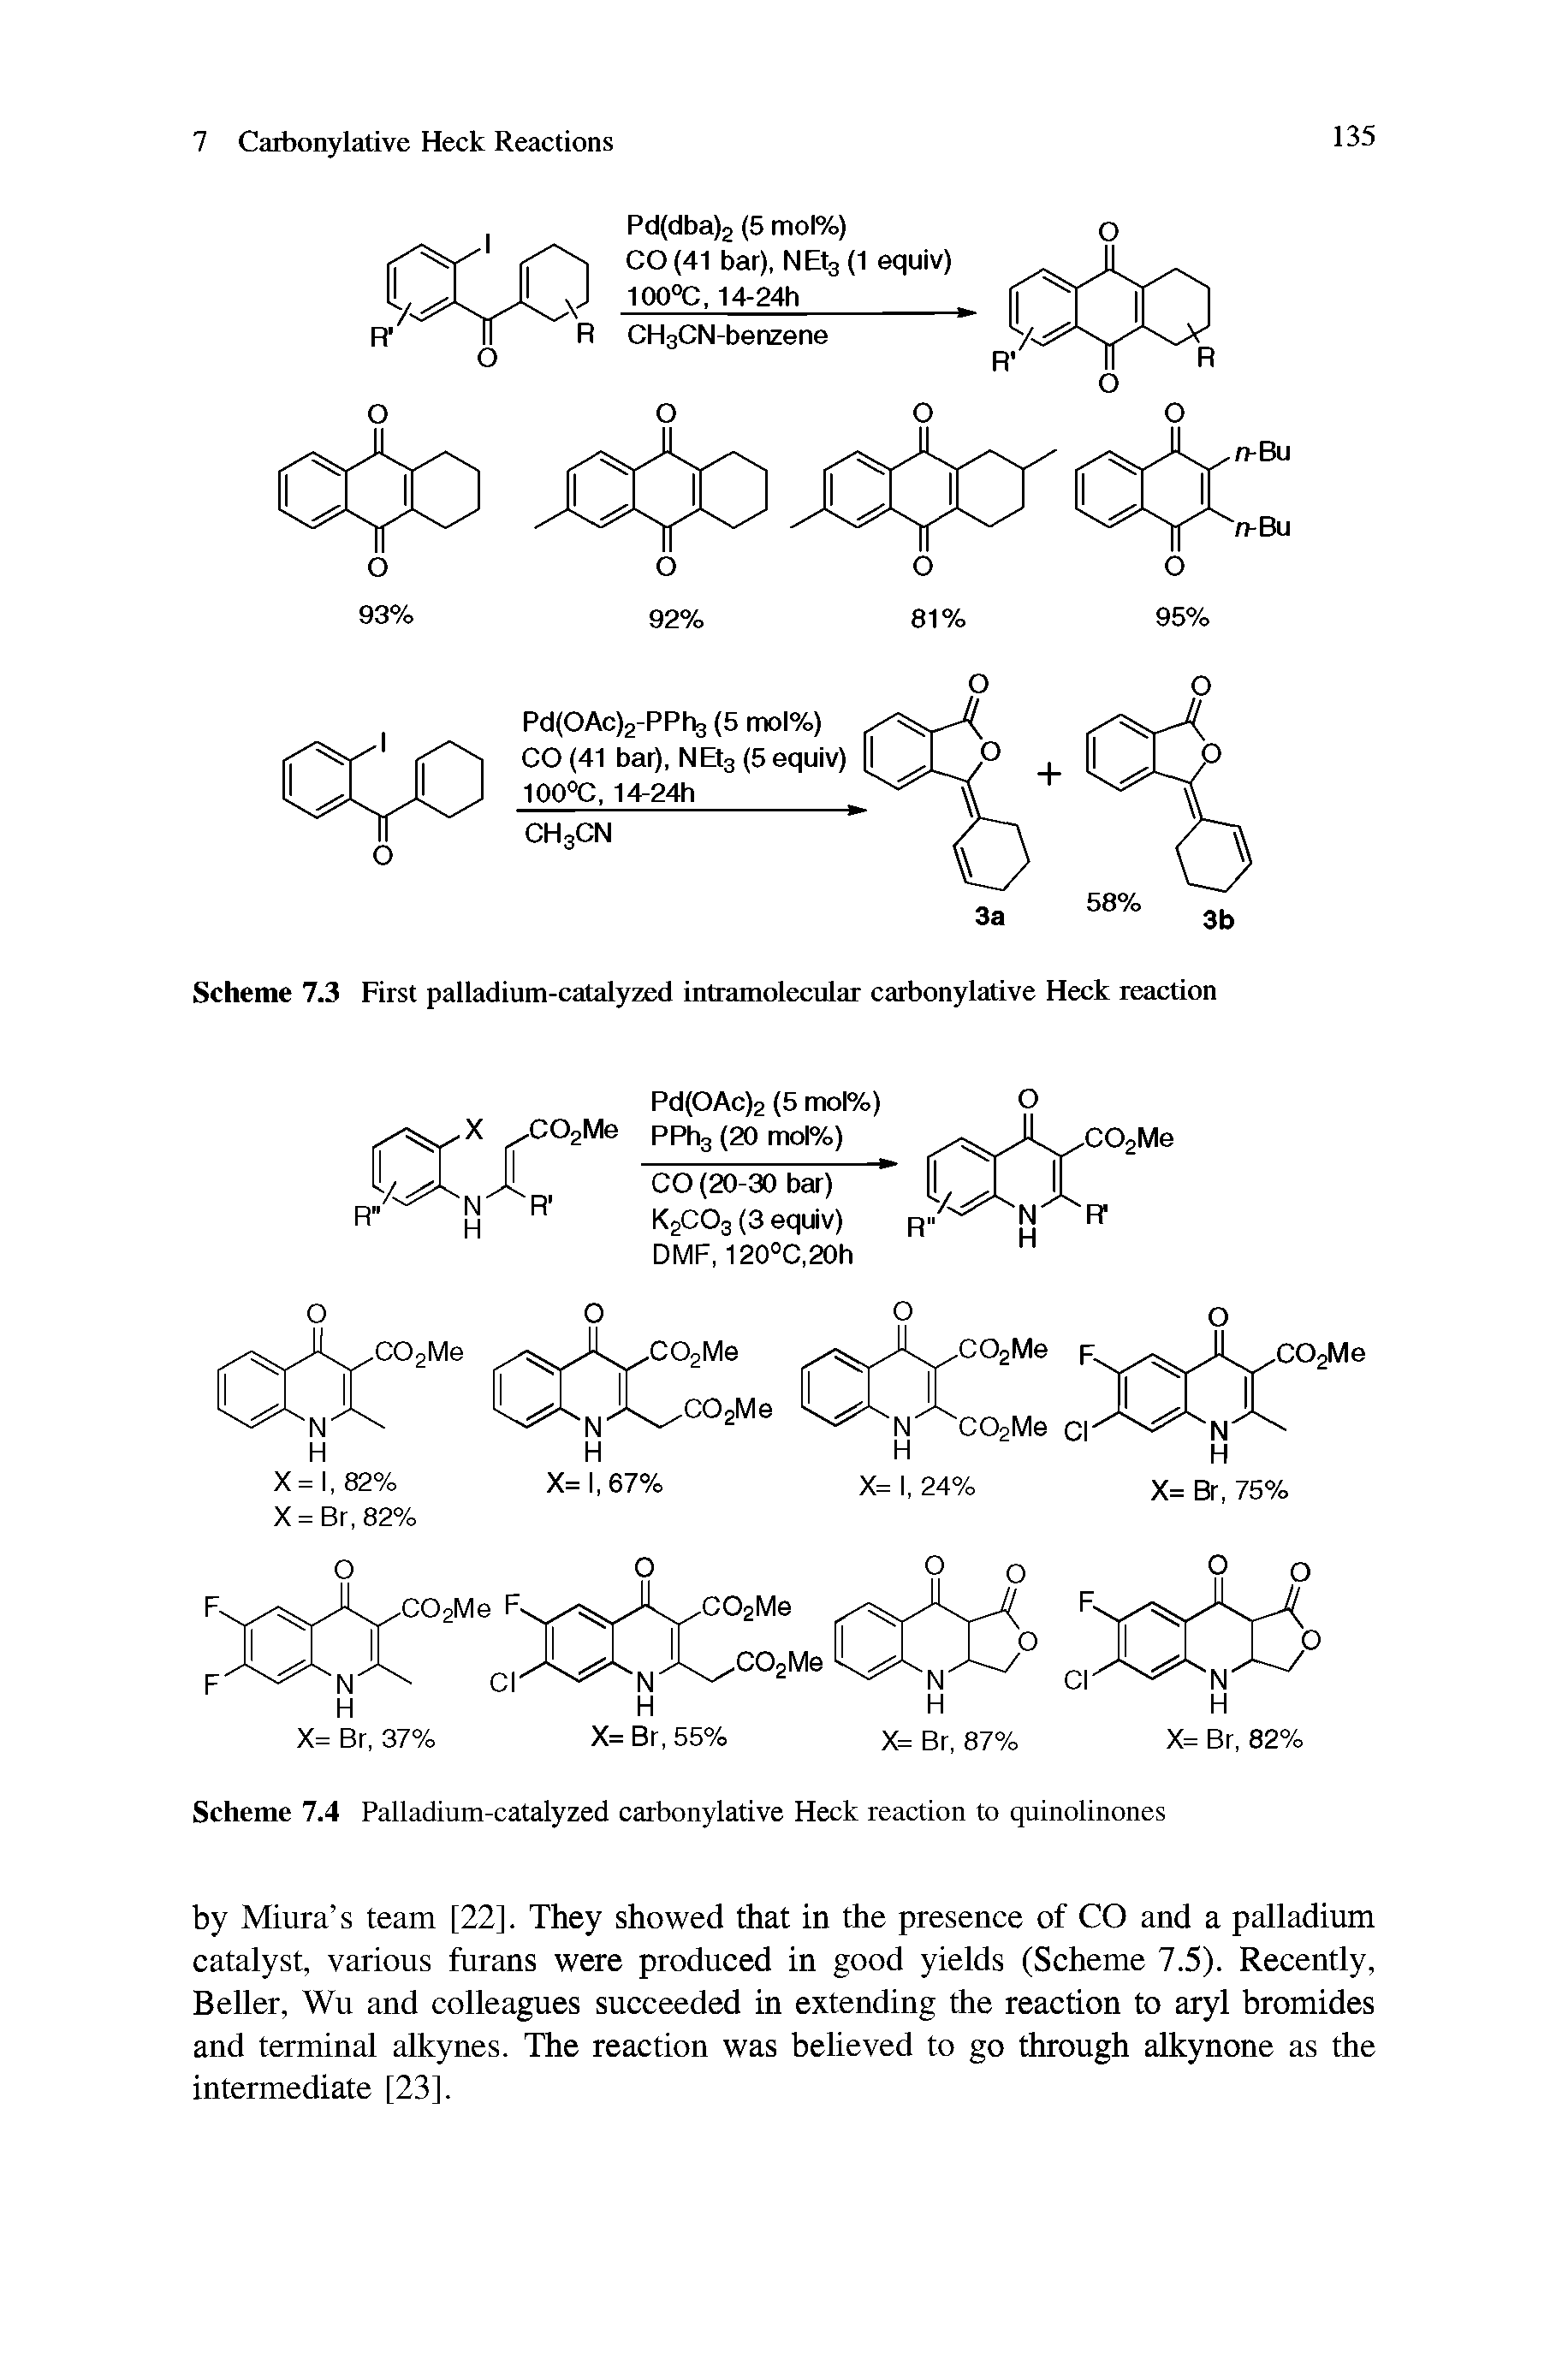 Scheme 7.4 Palladium-catalyzed carbonylative Heck reaction to quinolinones...